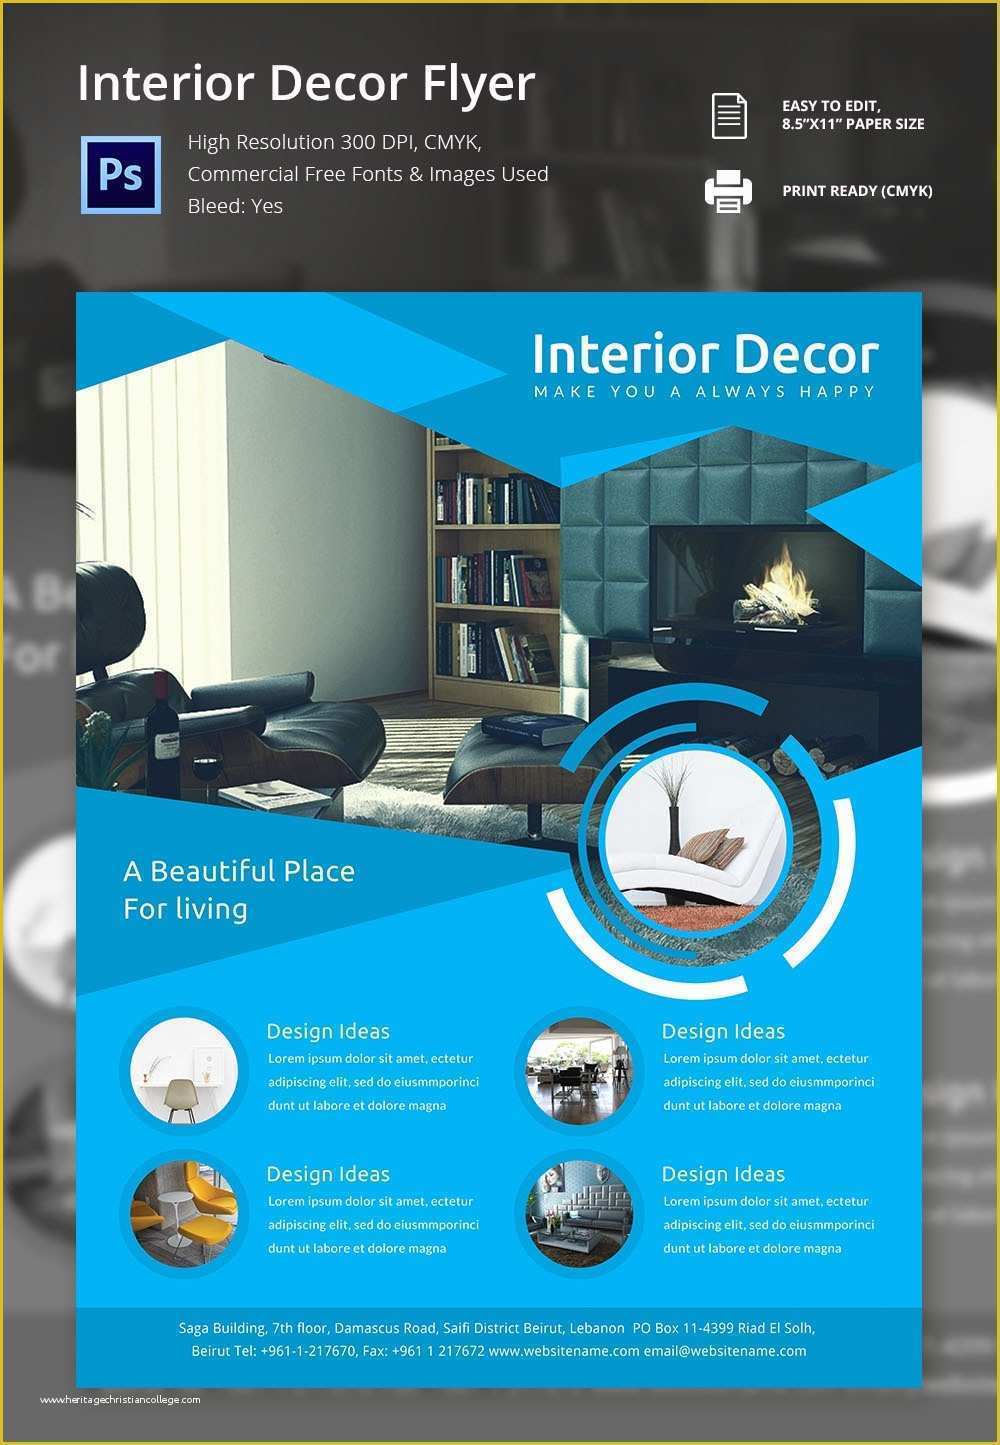 Free Poster Design Templates Of Interior Design Flyer Template 25 Free Psd Ai Vector